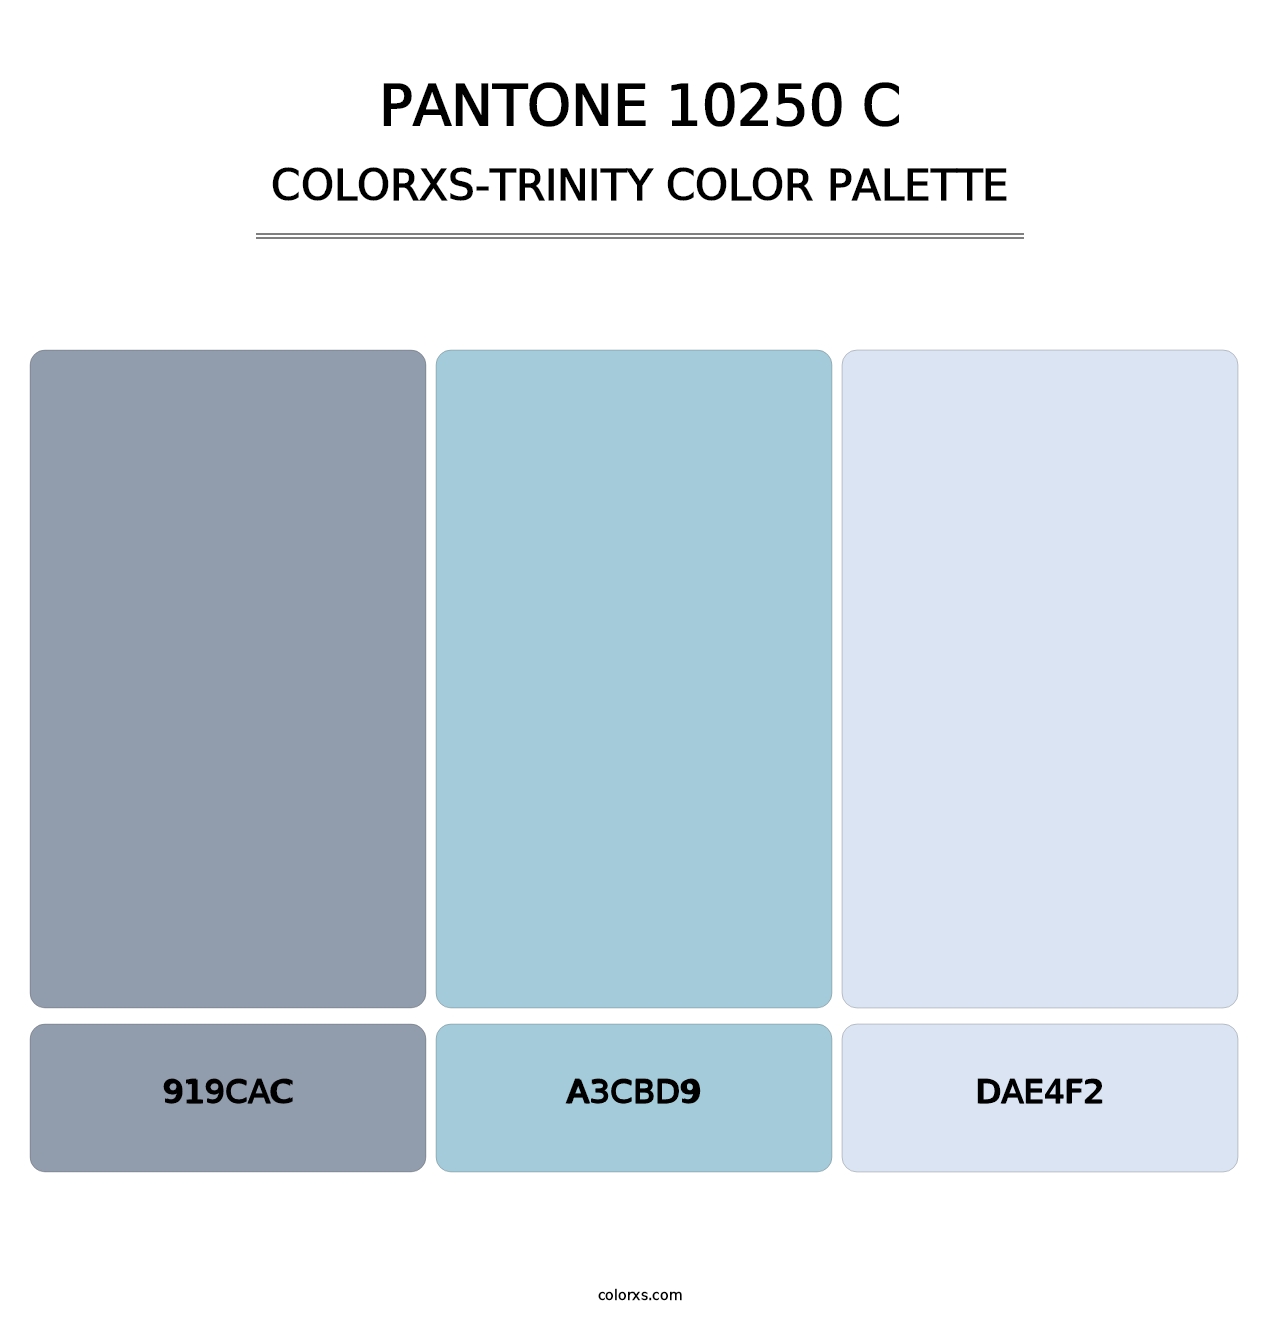 PANTONE 10250 C - Colorxs Trinity Palette